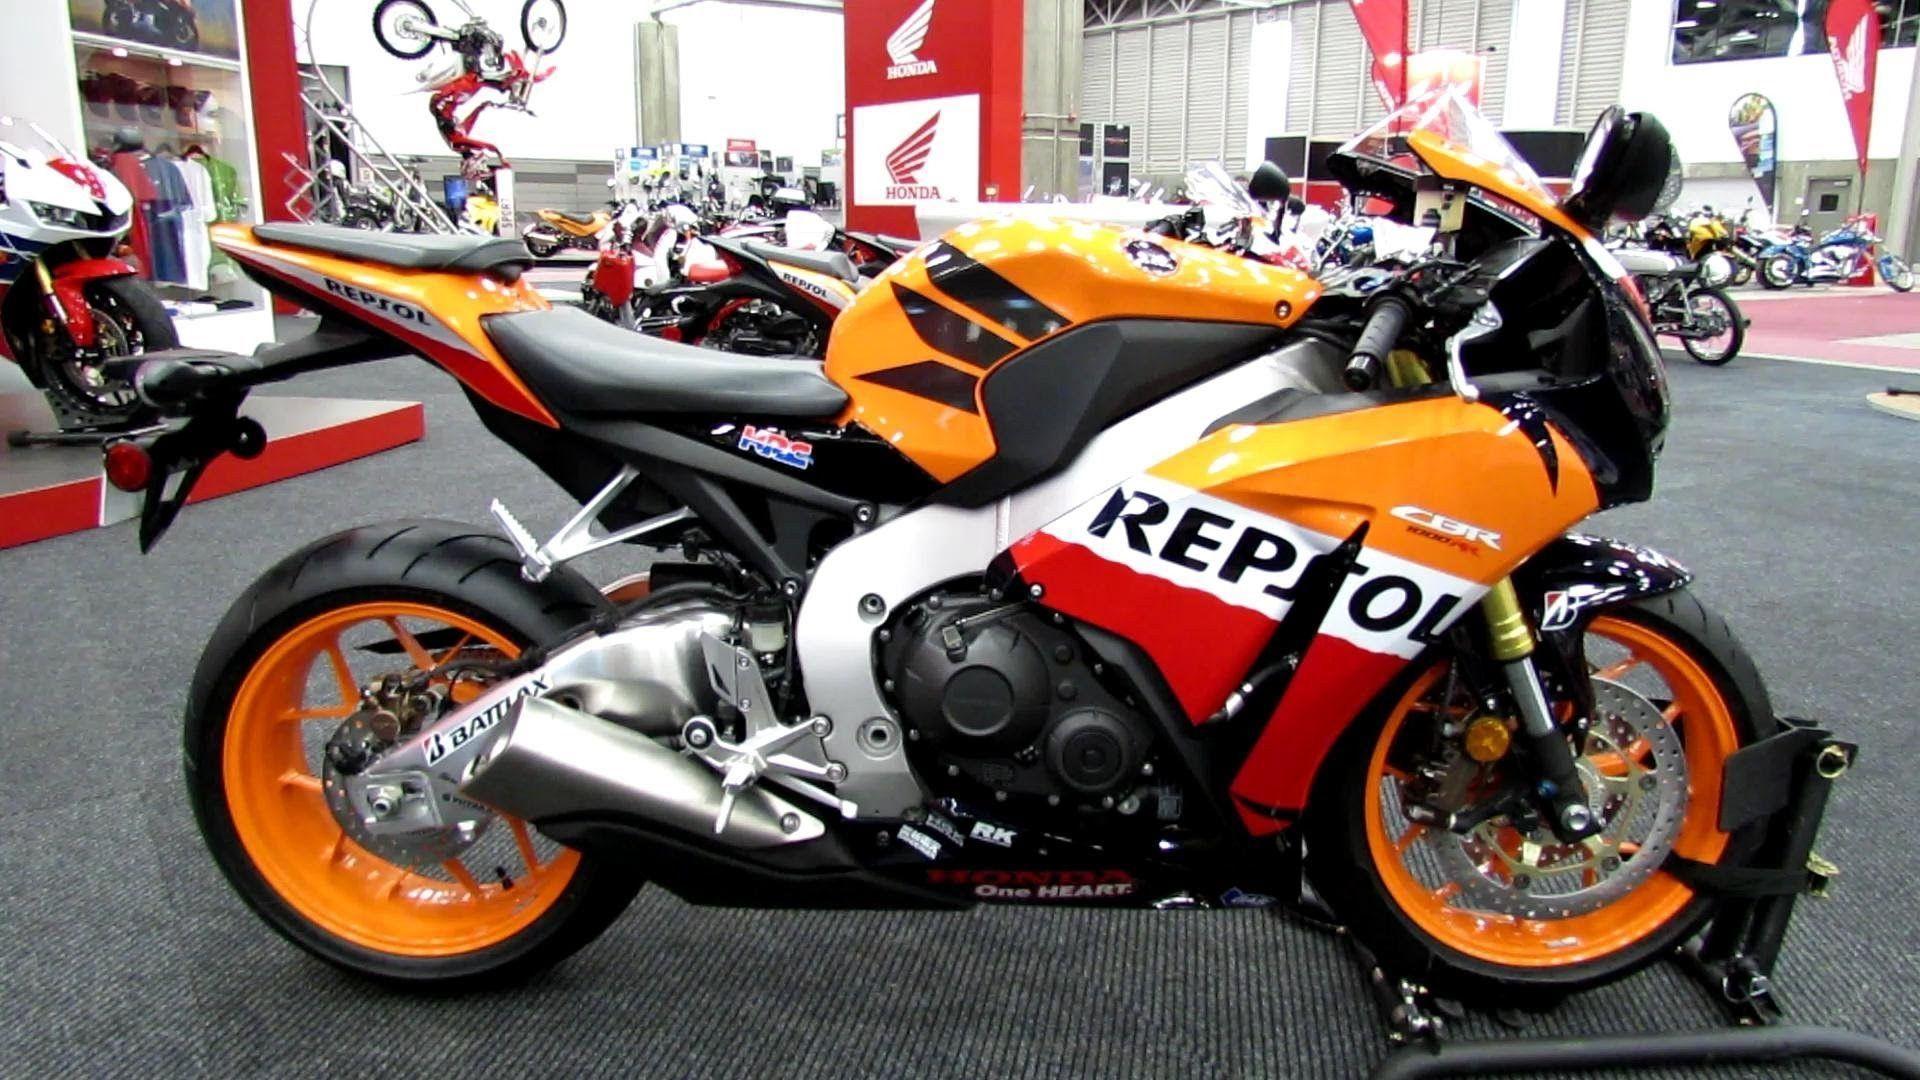 Honda Cbr1000rr Repsol 2013 Motorcycle Wallpaper